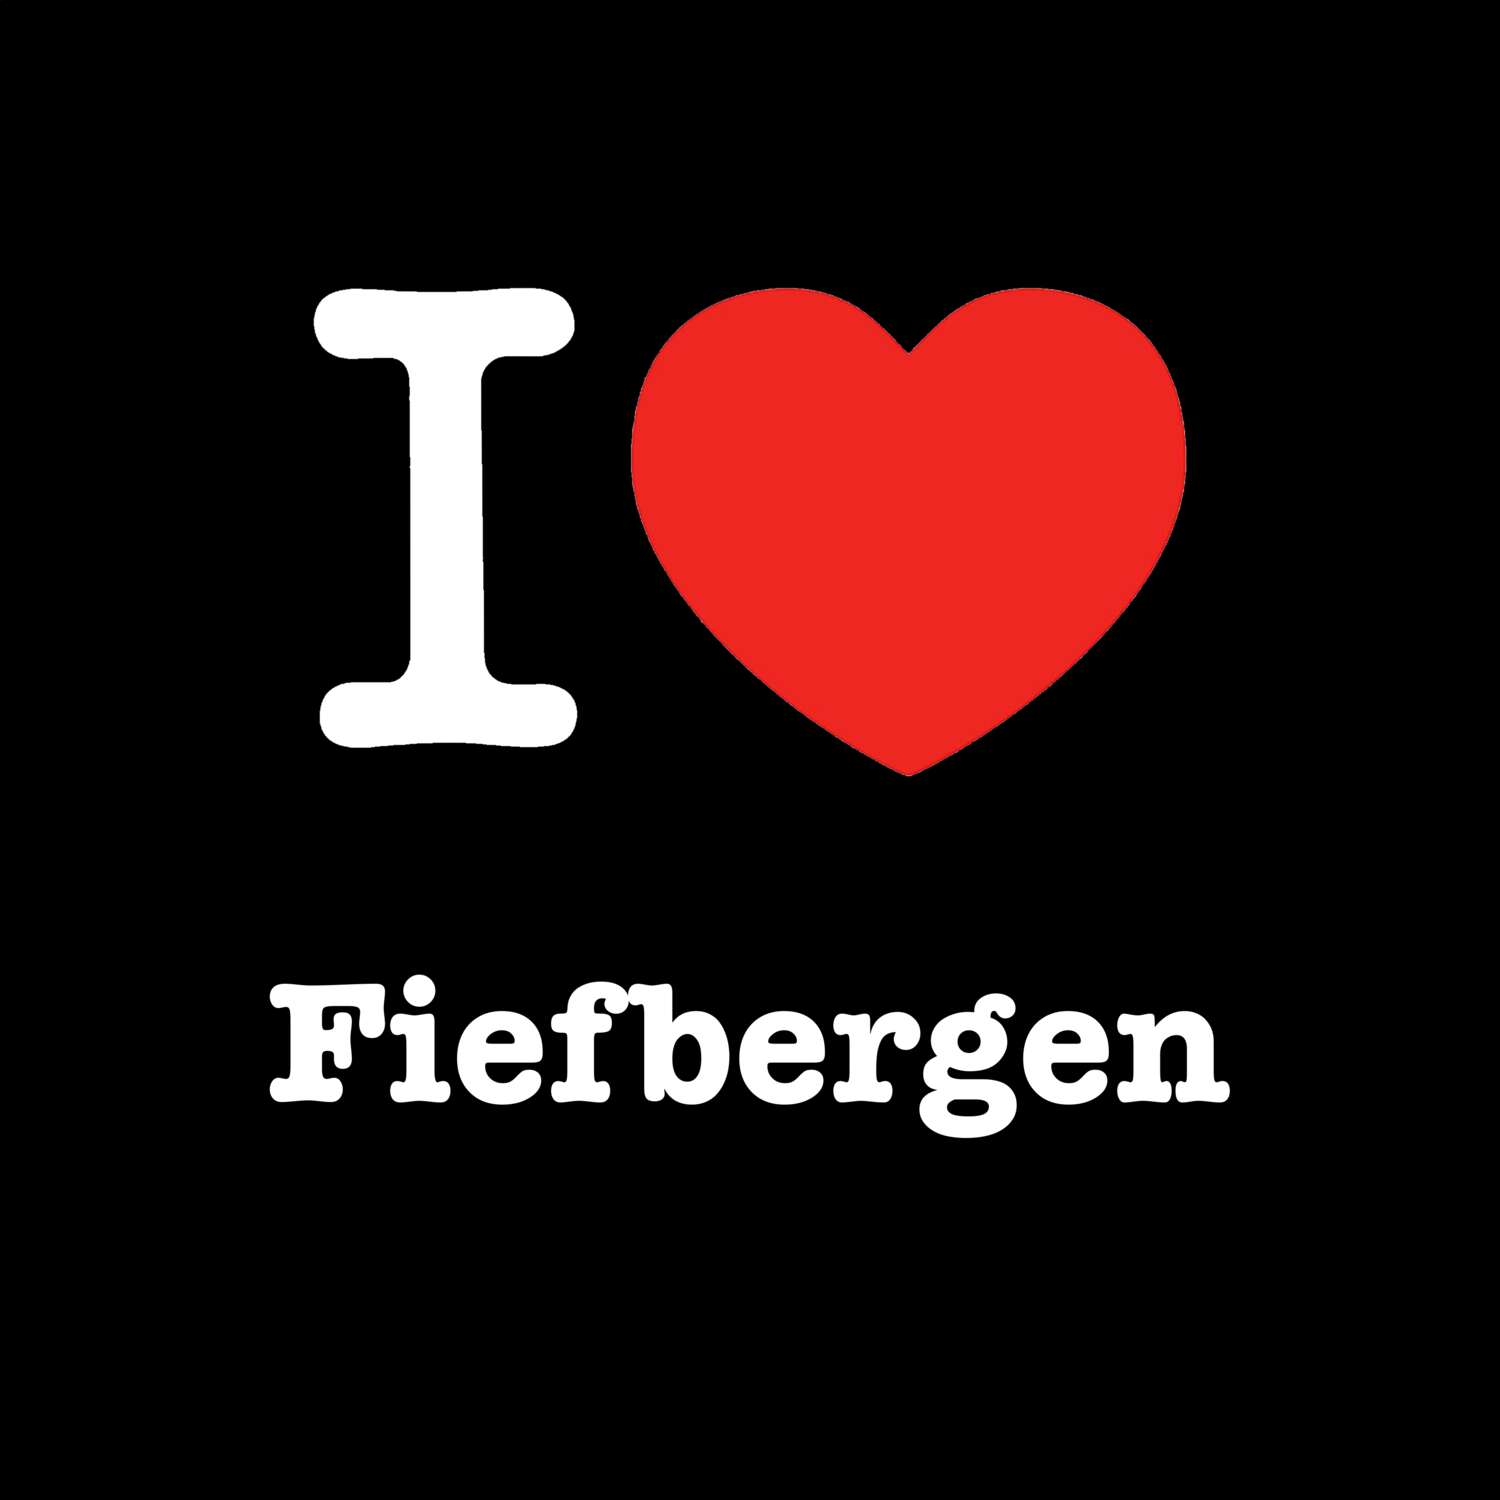 Fiefbergen T-Shirt »I love«